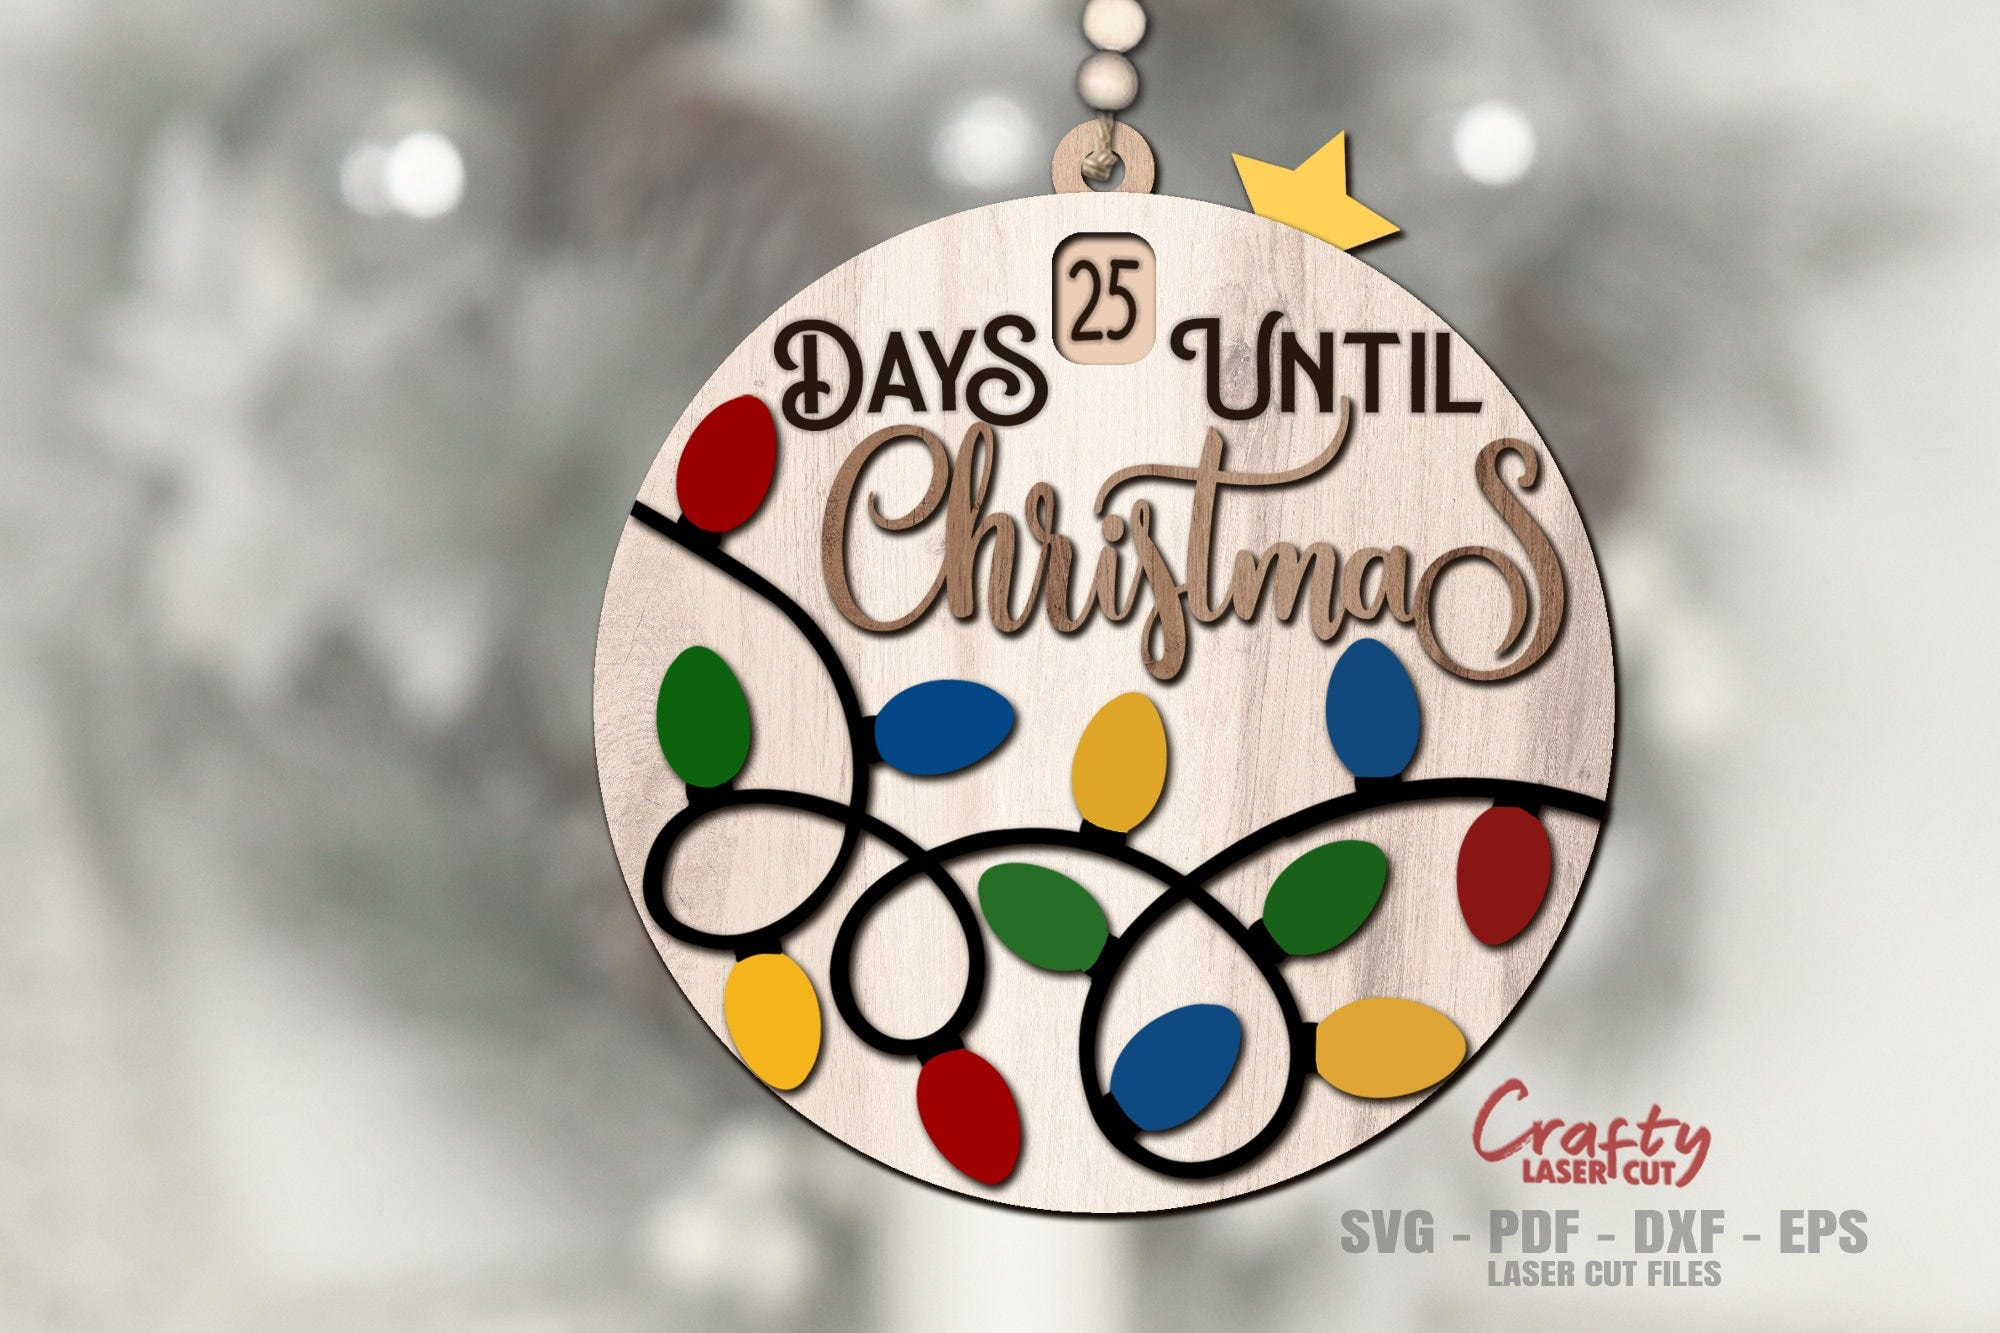 Christmas Countdown Ornament SVG - Laser Cut Files - Christmas Lights Svg - Ornament Svg - Days Until Christmas - Glowforge Files